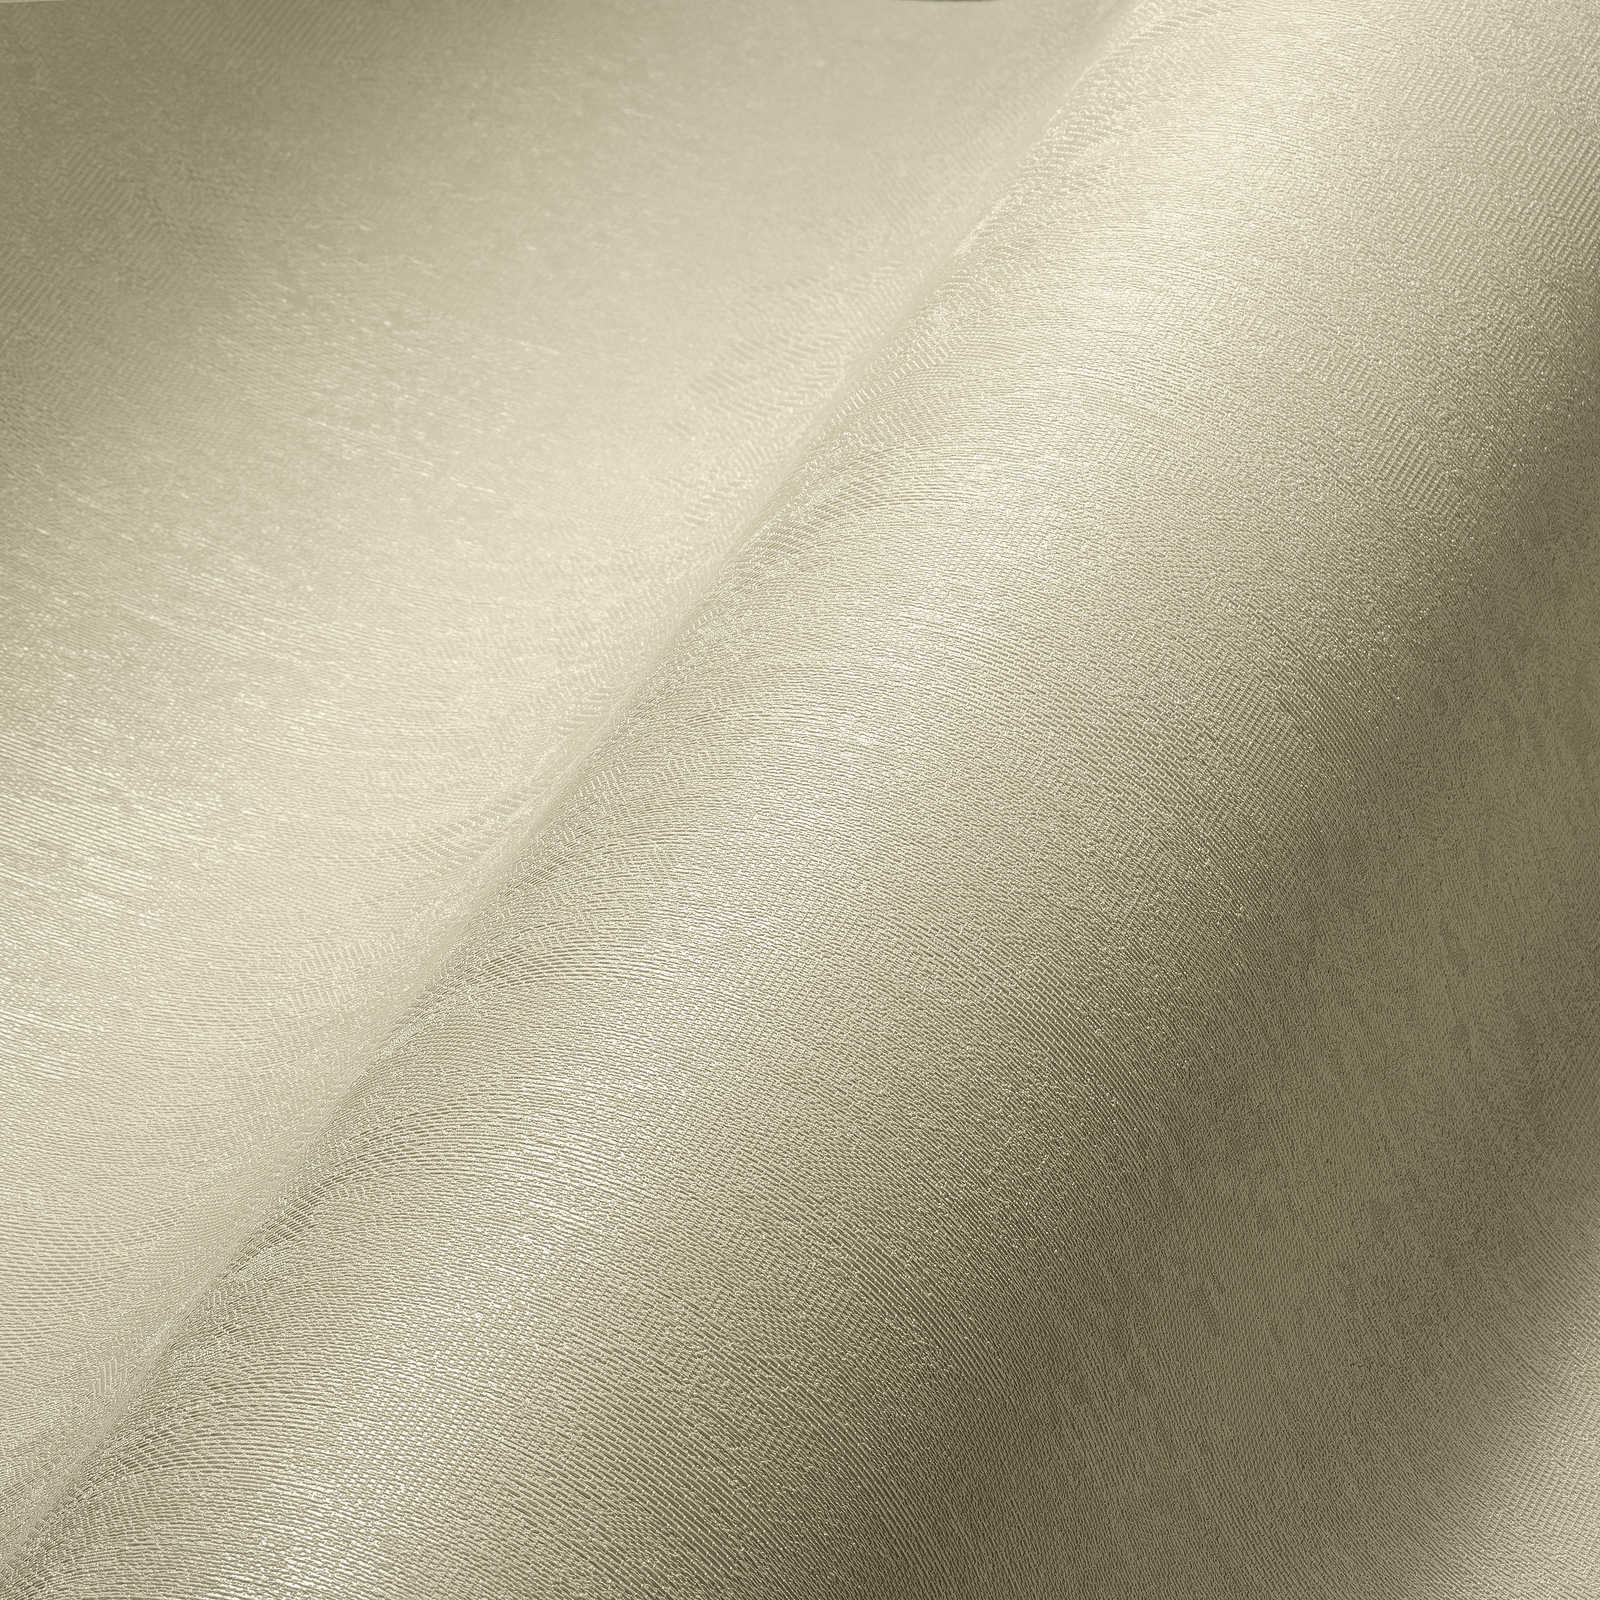             Papel pintado unitario neutro con superficie texturizada - crema
        